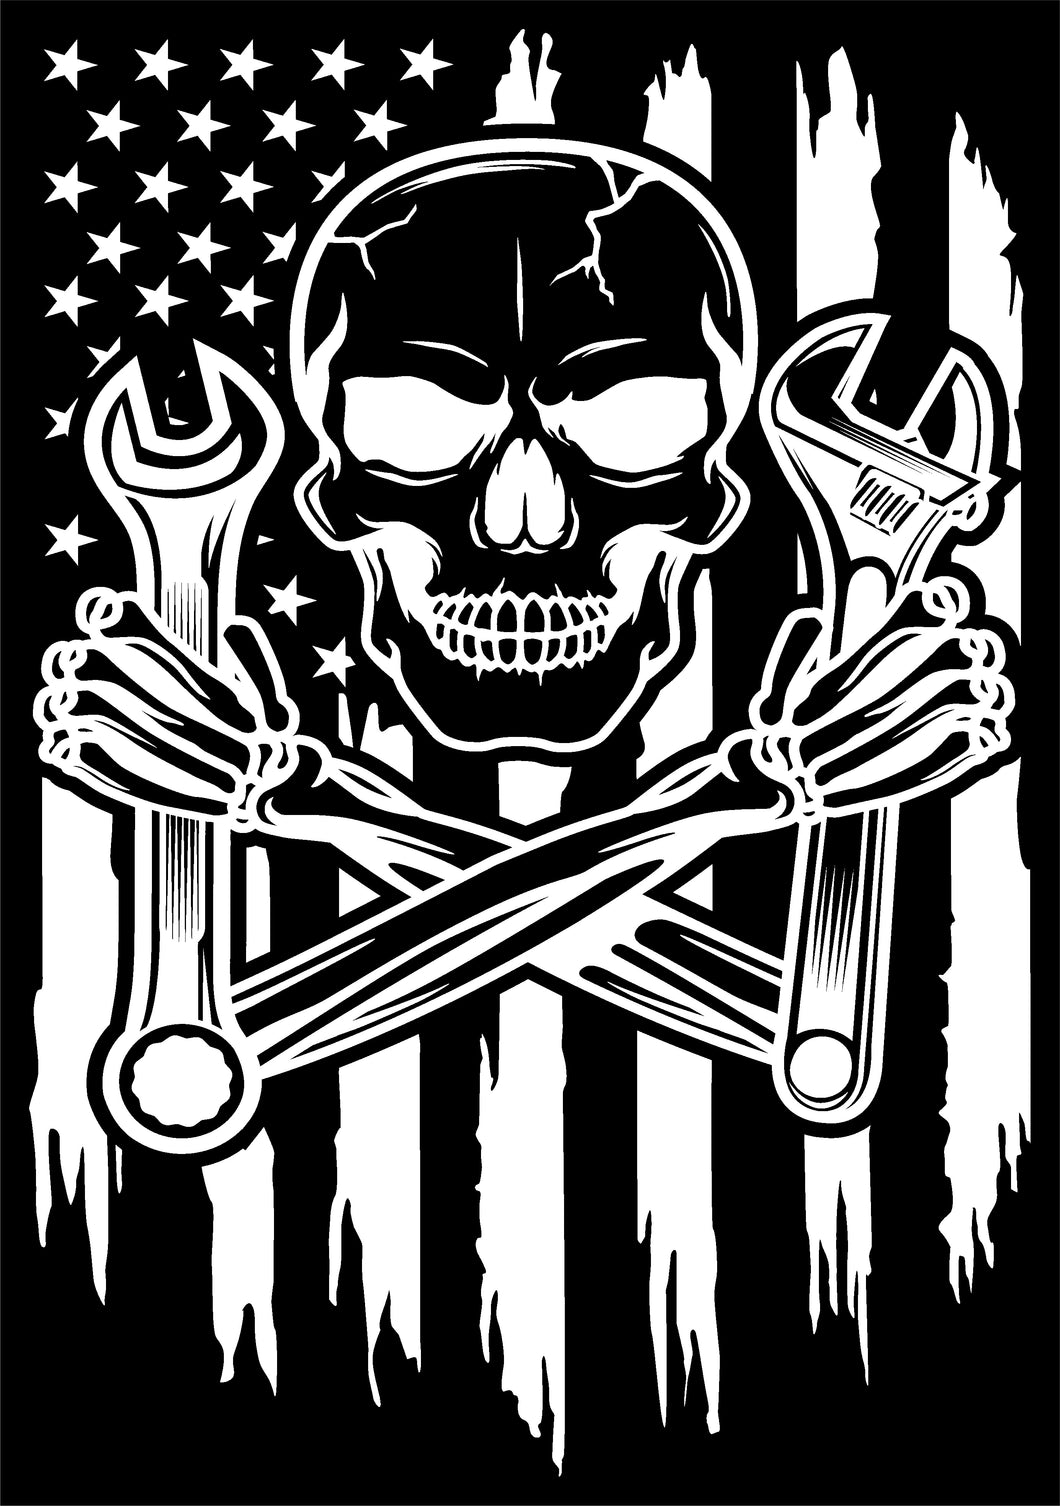 USA Skull tool flag